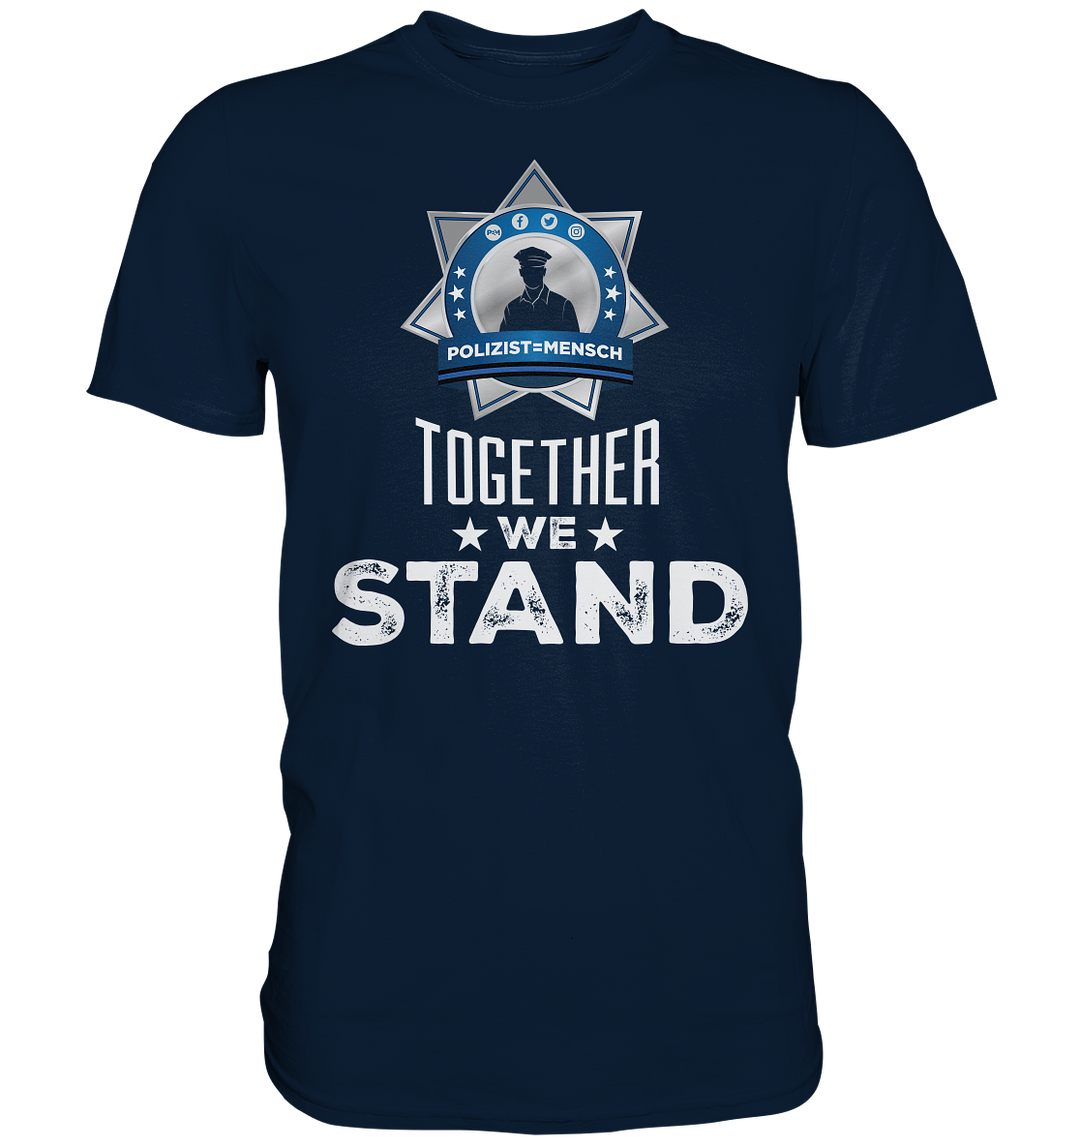 "Together We Stand" - Premium Shirt